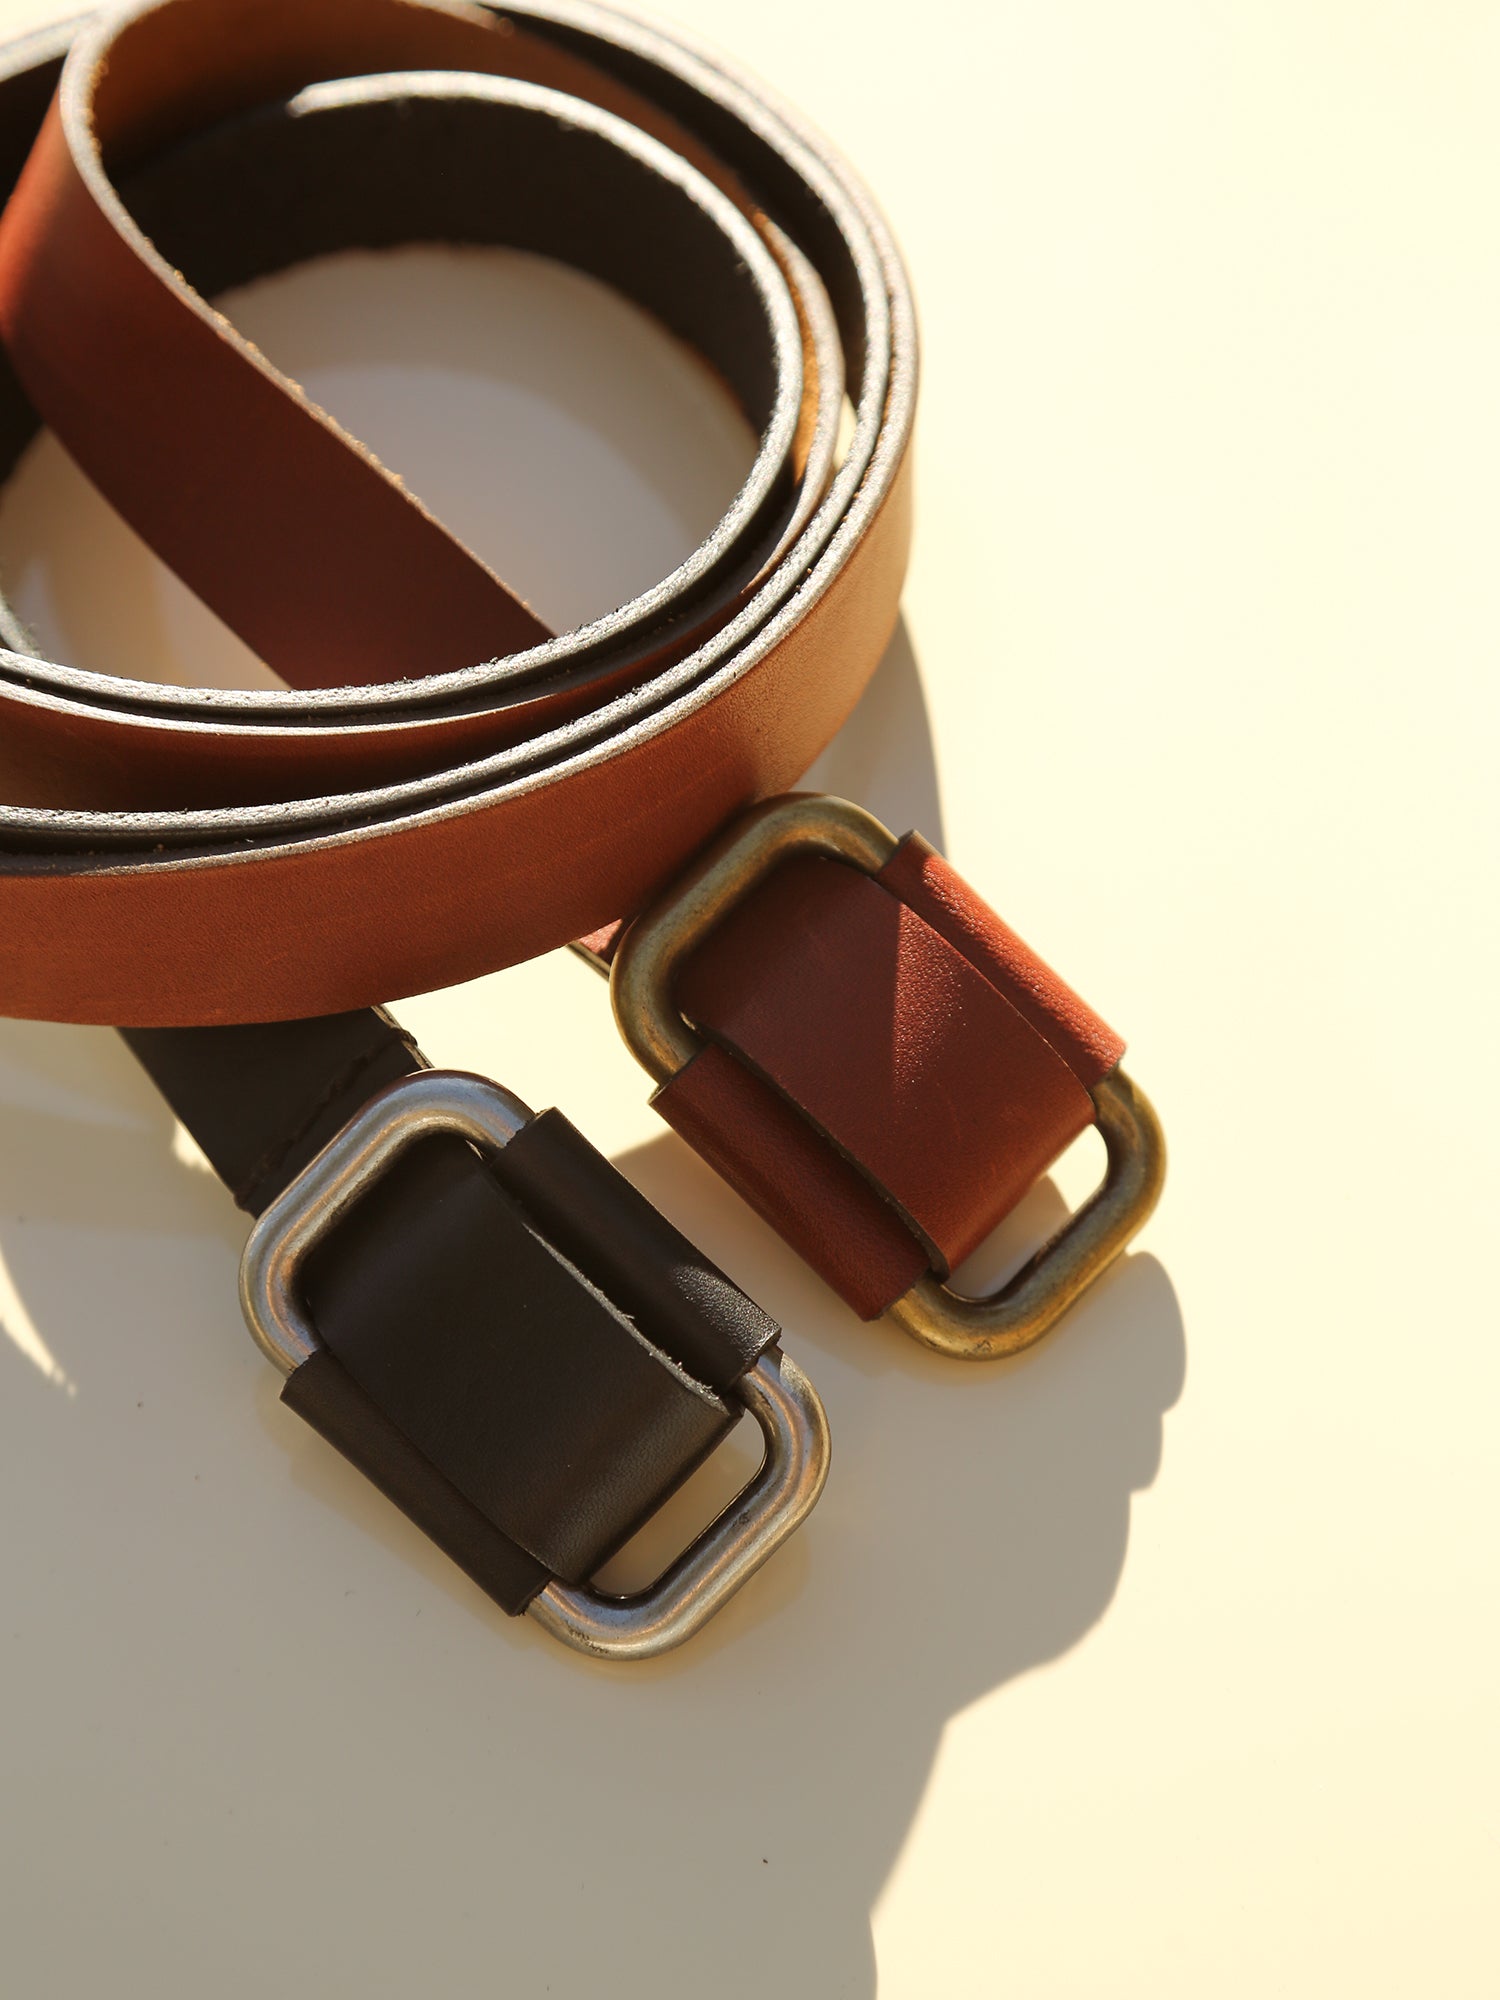 Saddle brown & black leather buckle belts close up